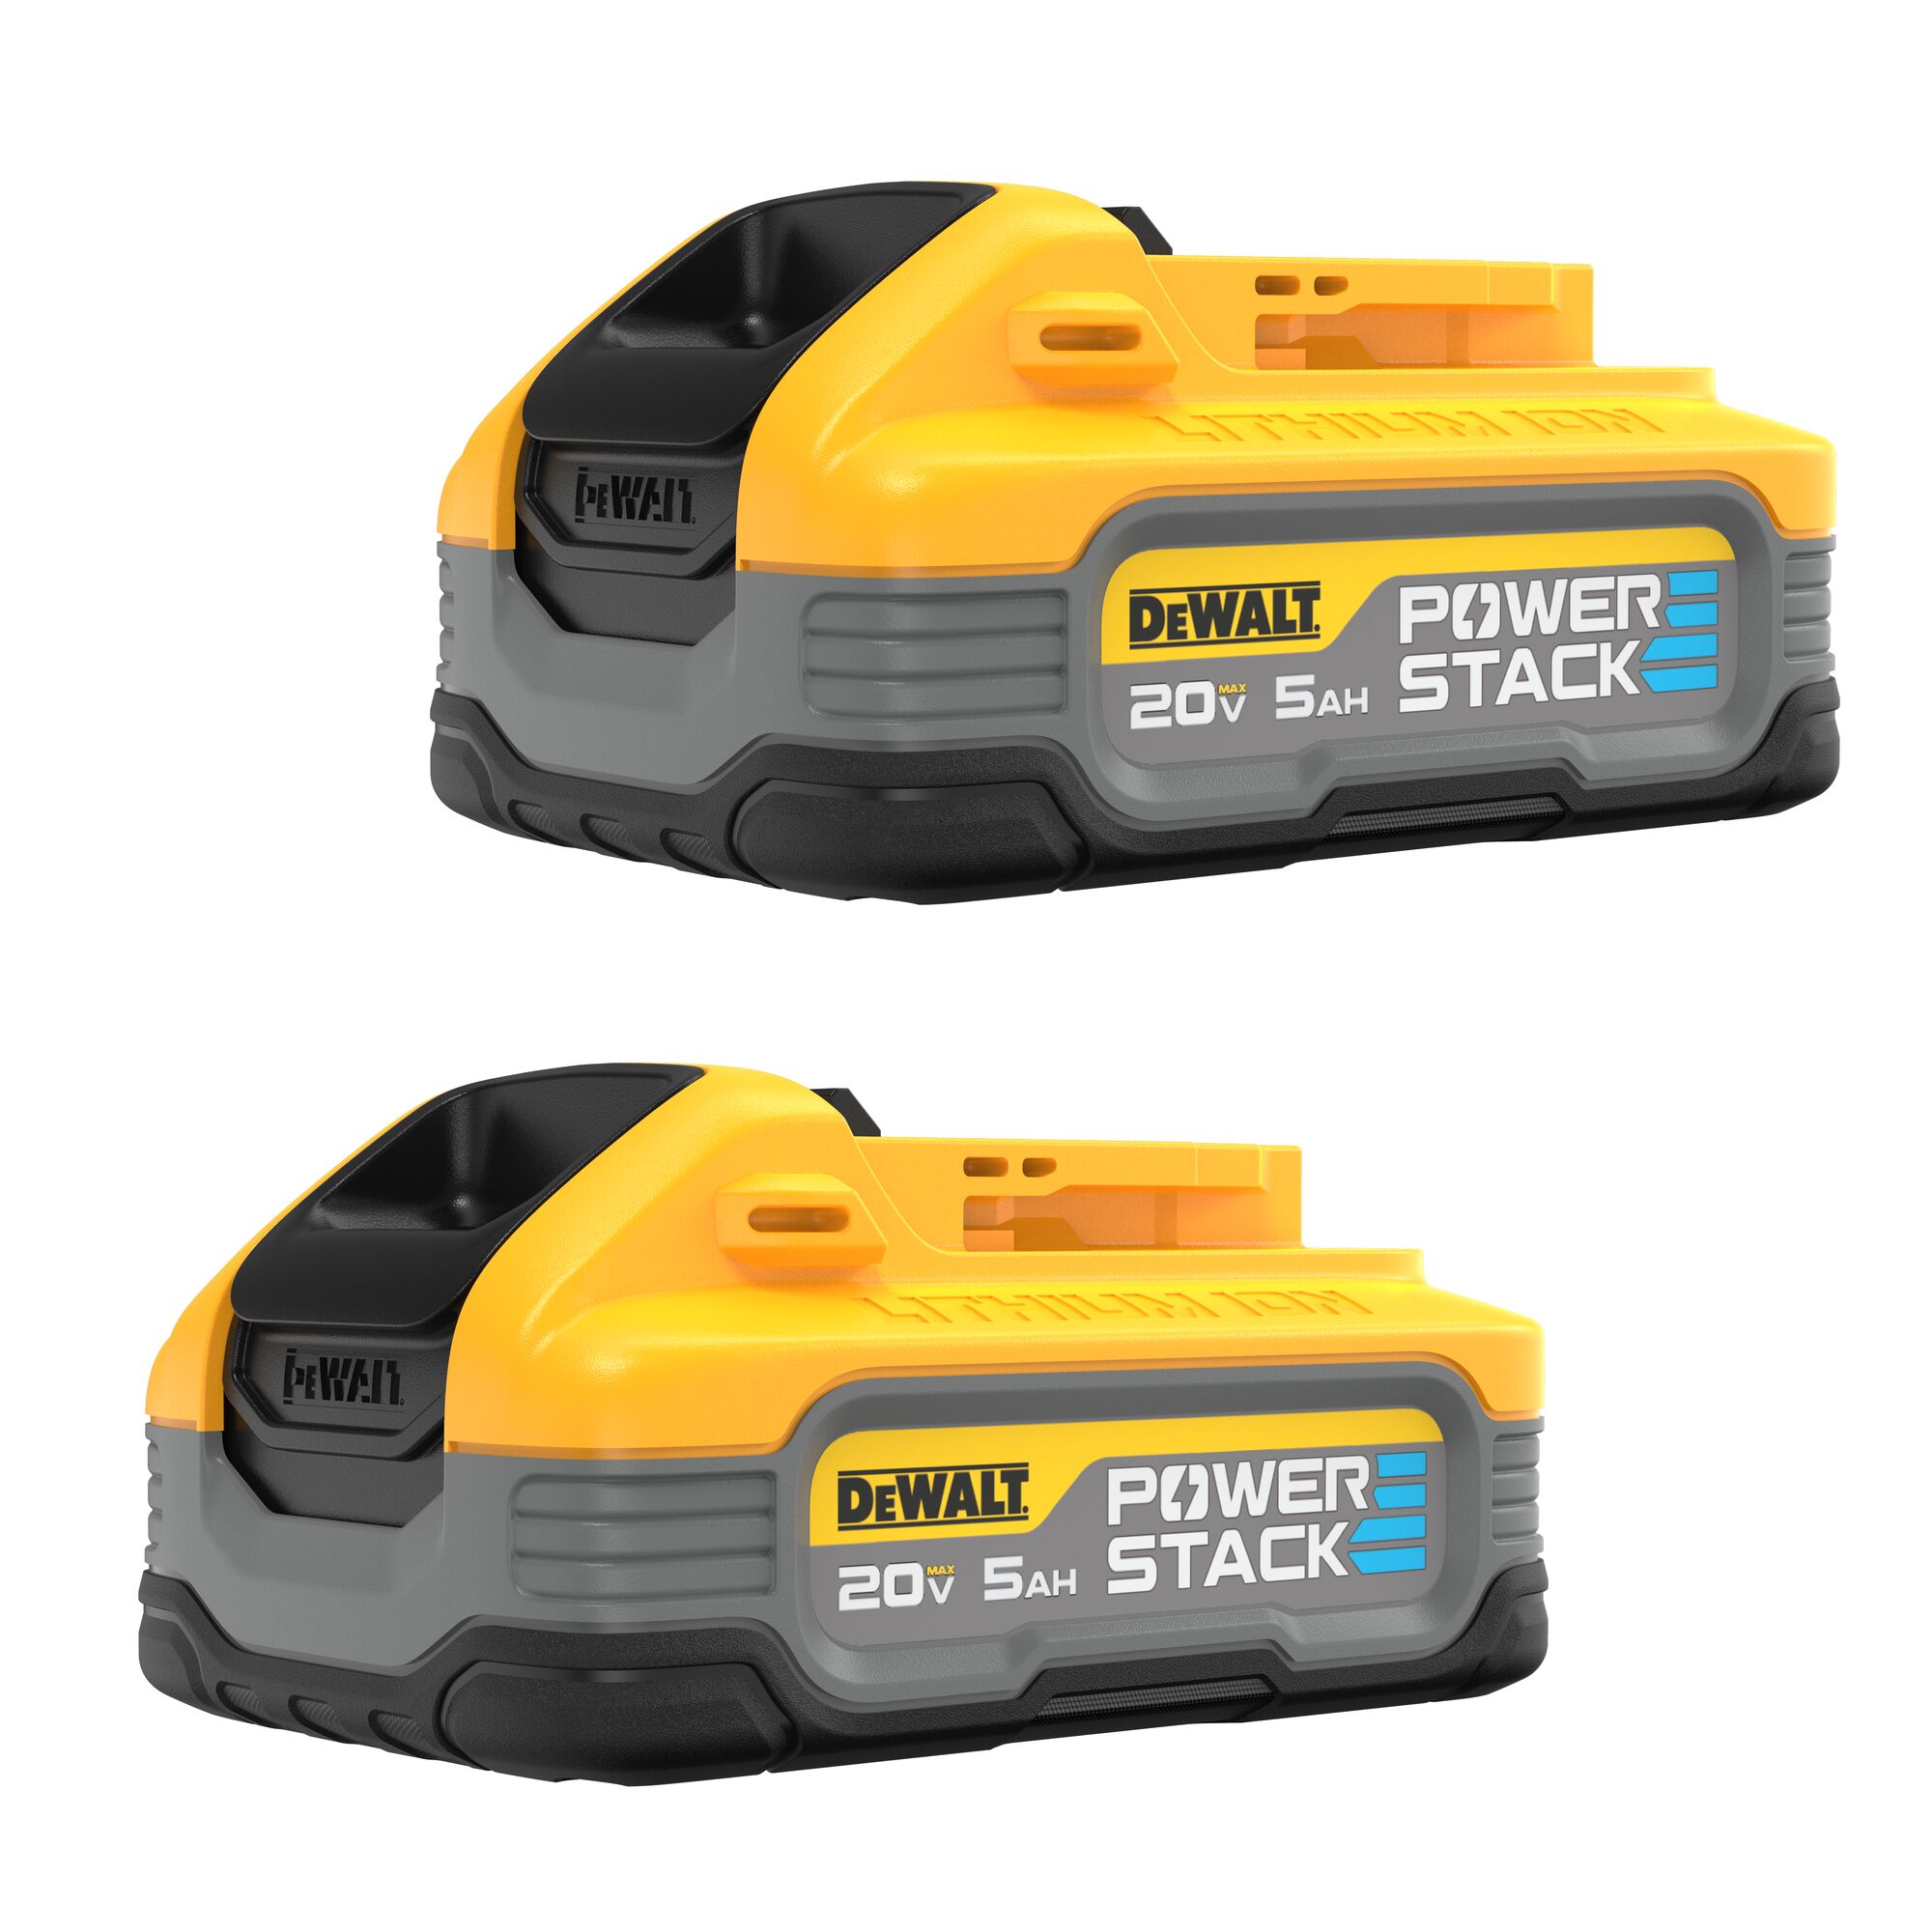 Dewalt PowerStack Battery Size Comparison